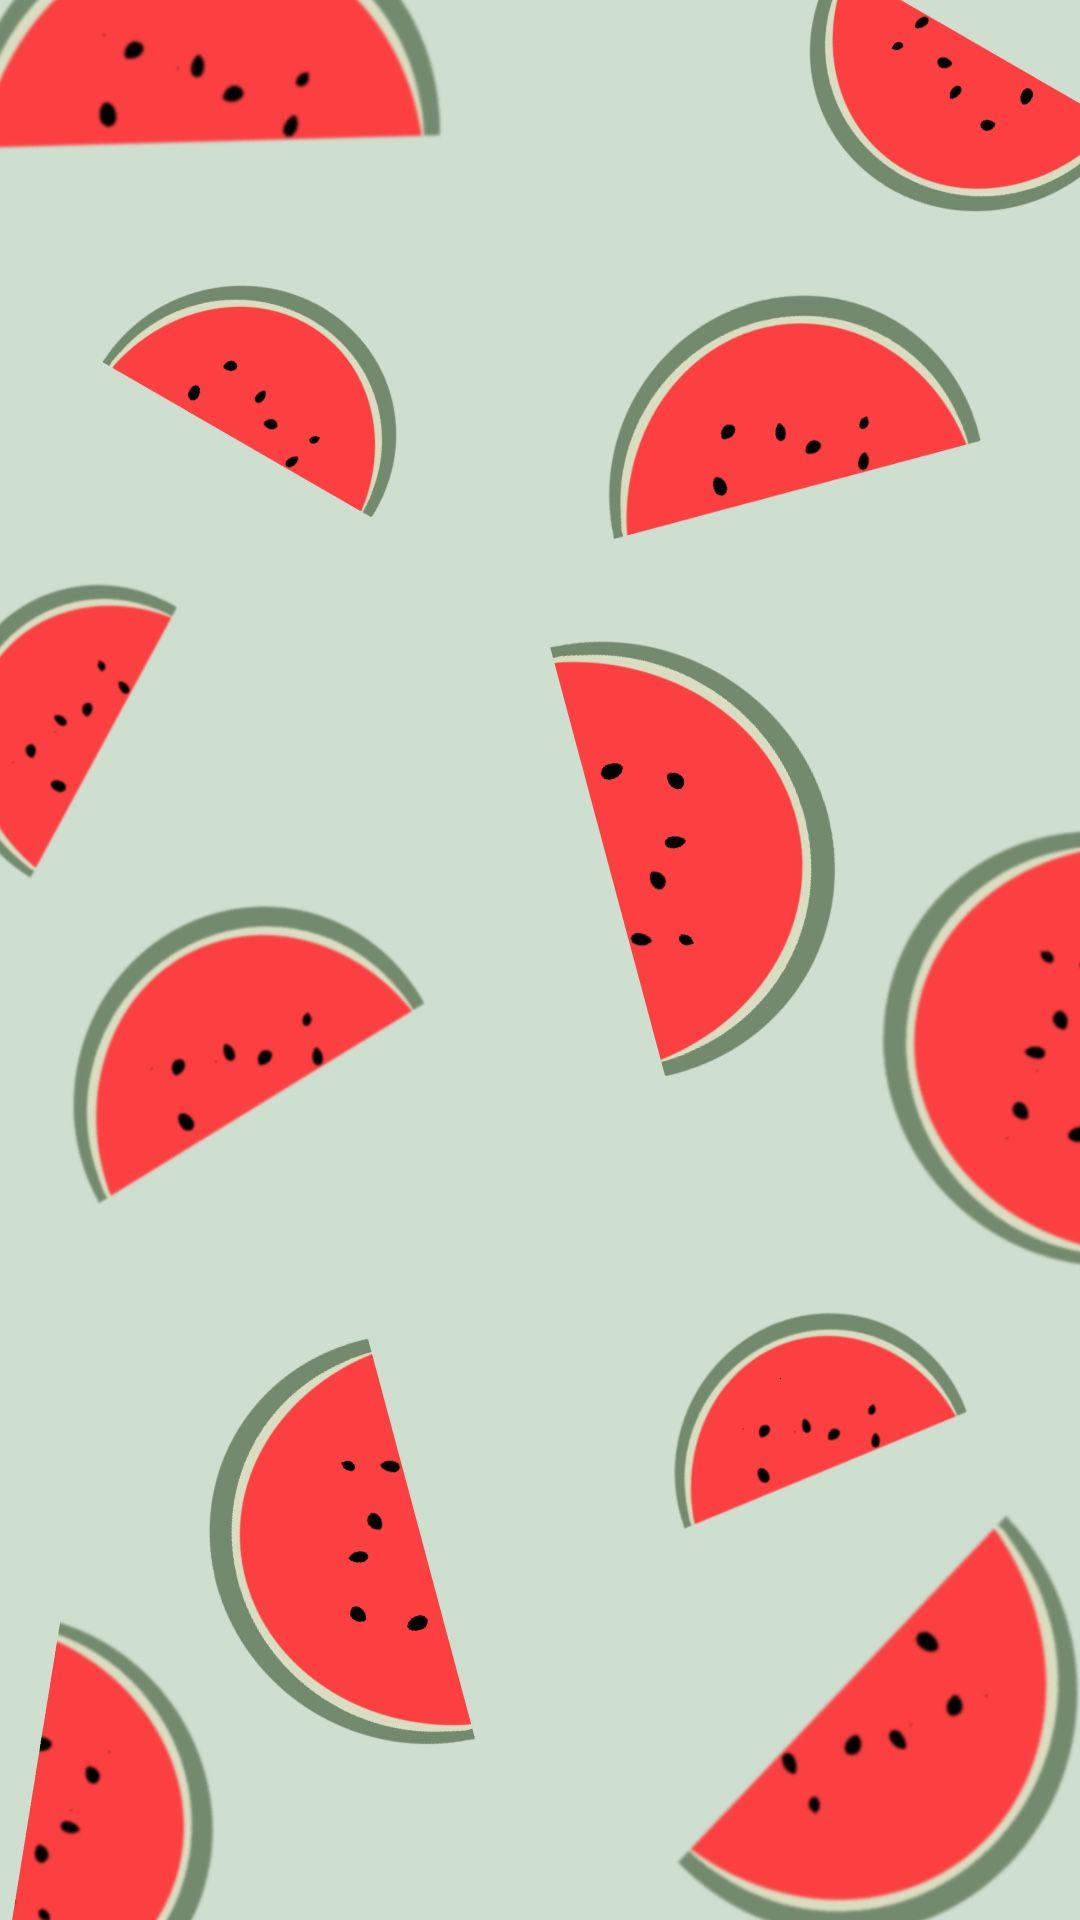 Watermelon Wallpaper Images  Free Download on Freepik